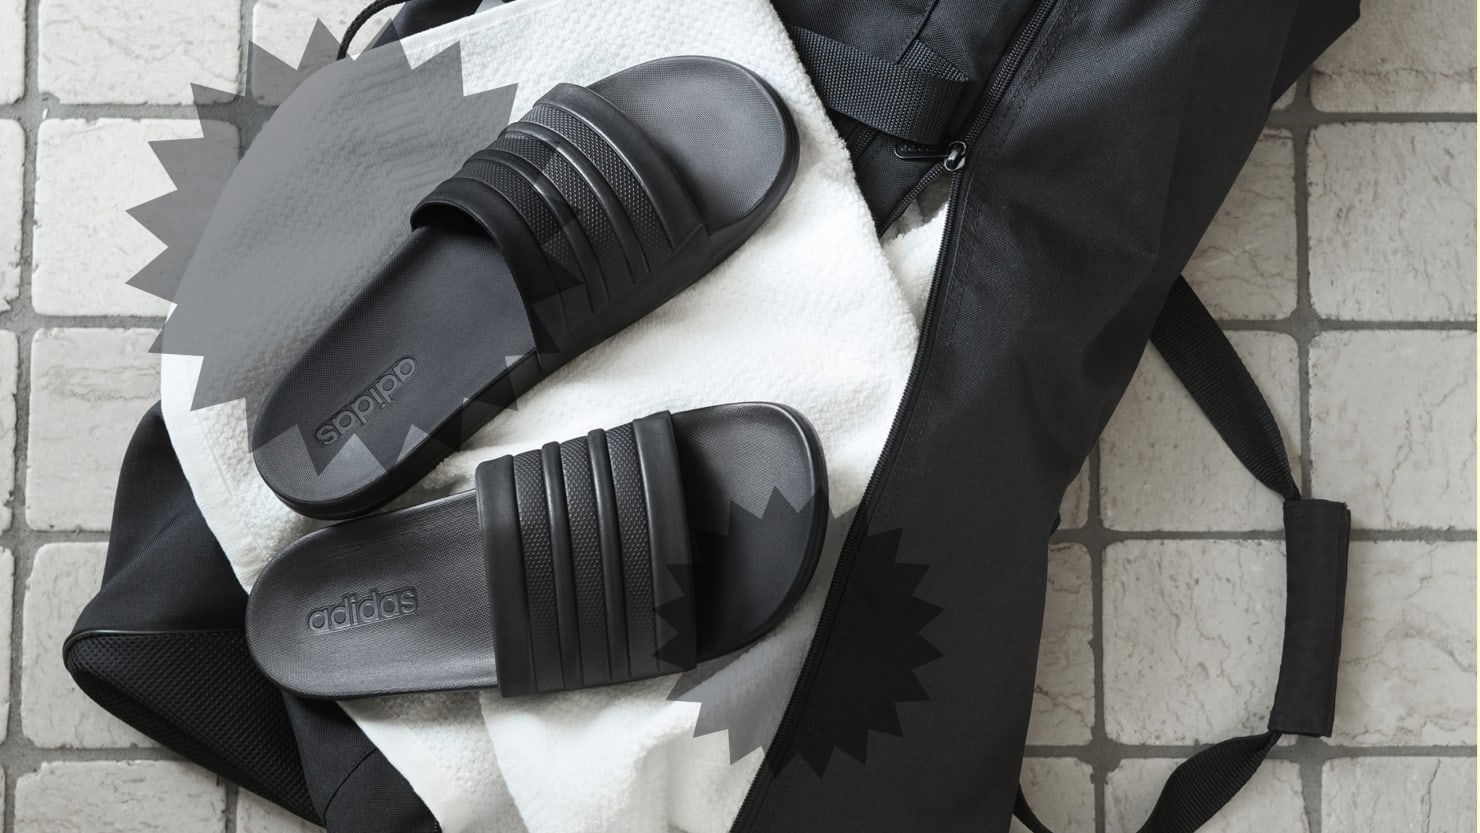 Adidas Adilette Comfort Review